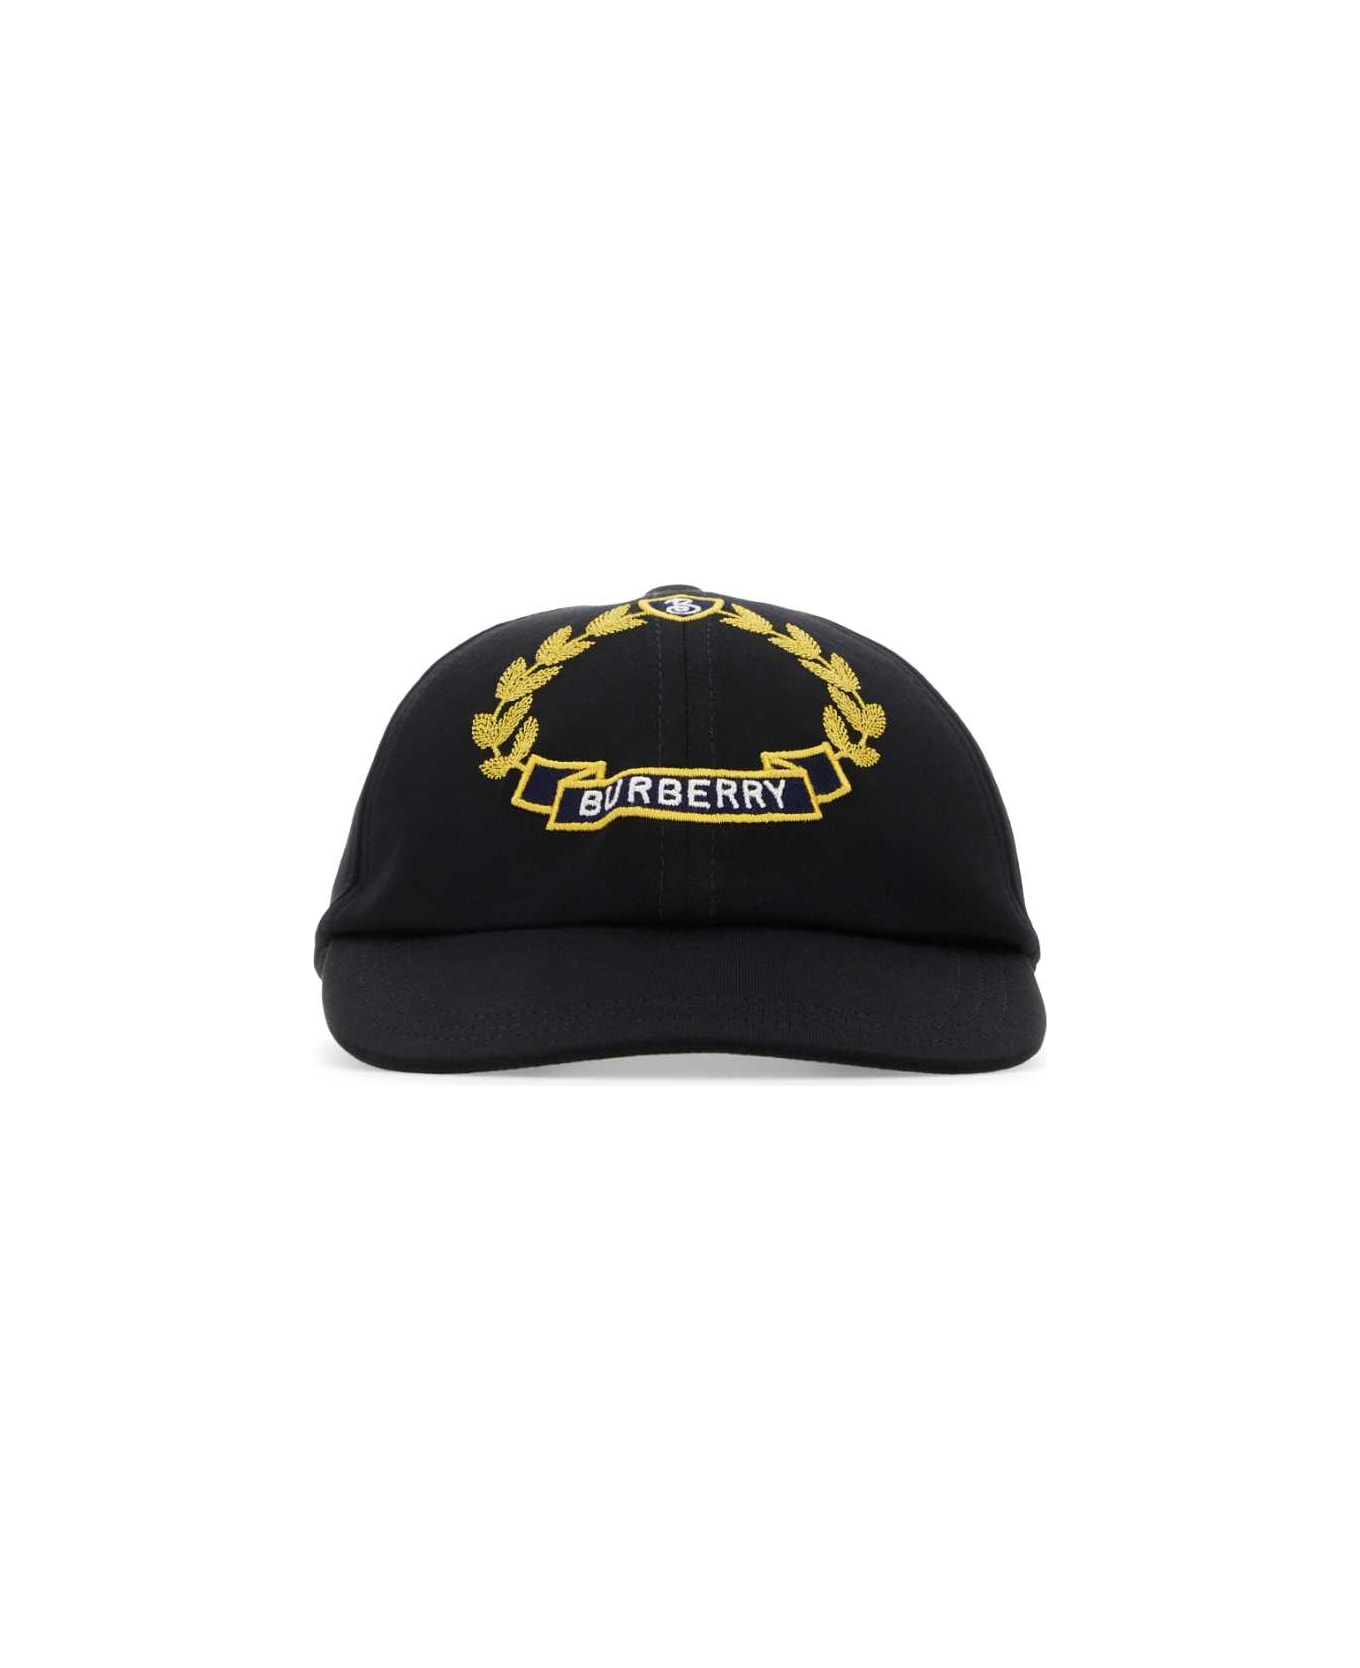 Burberry Black Cotton Baseball Cap - BLACK 帽子